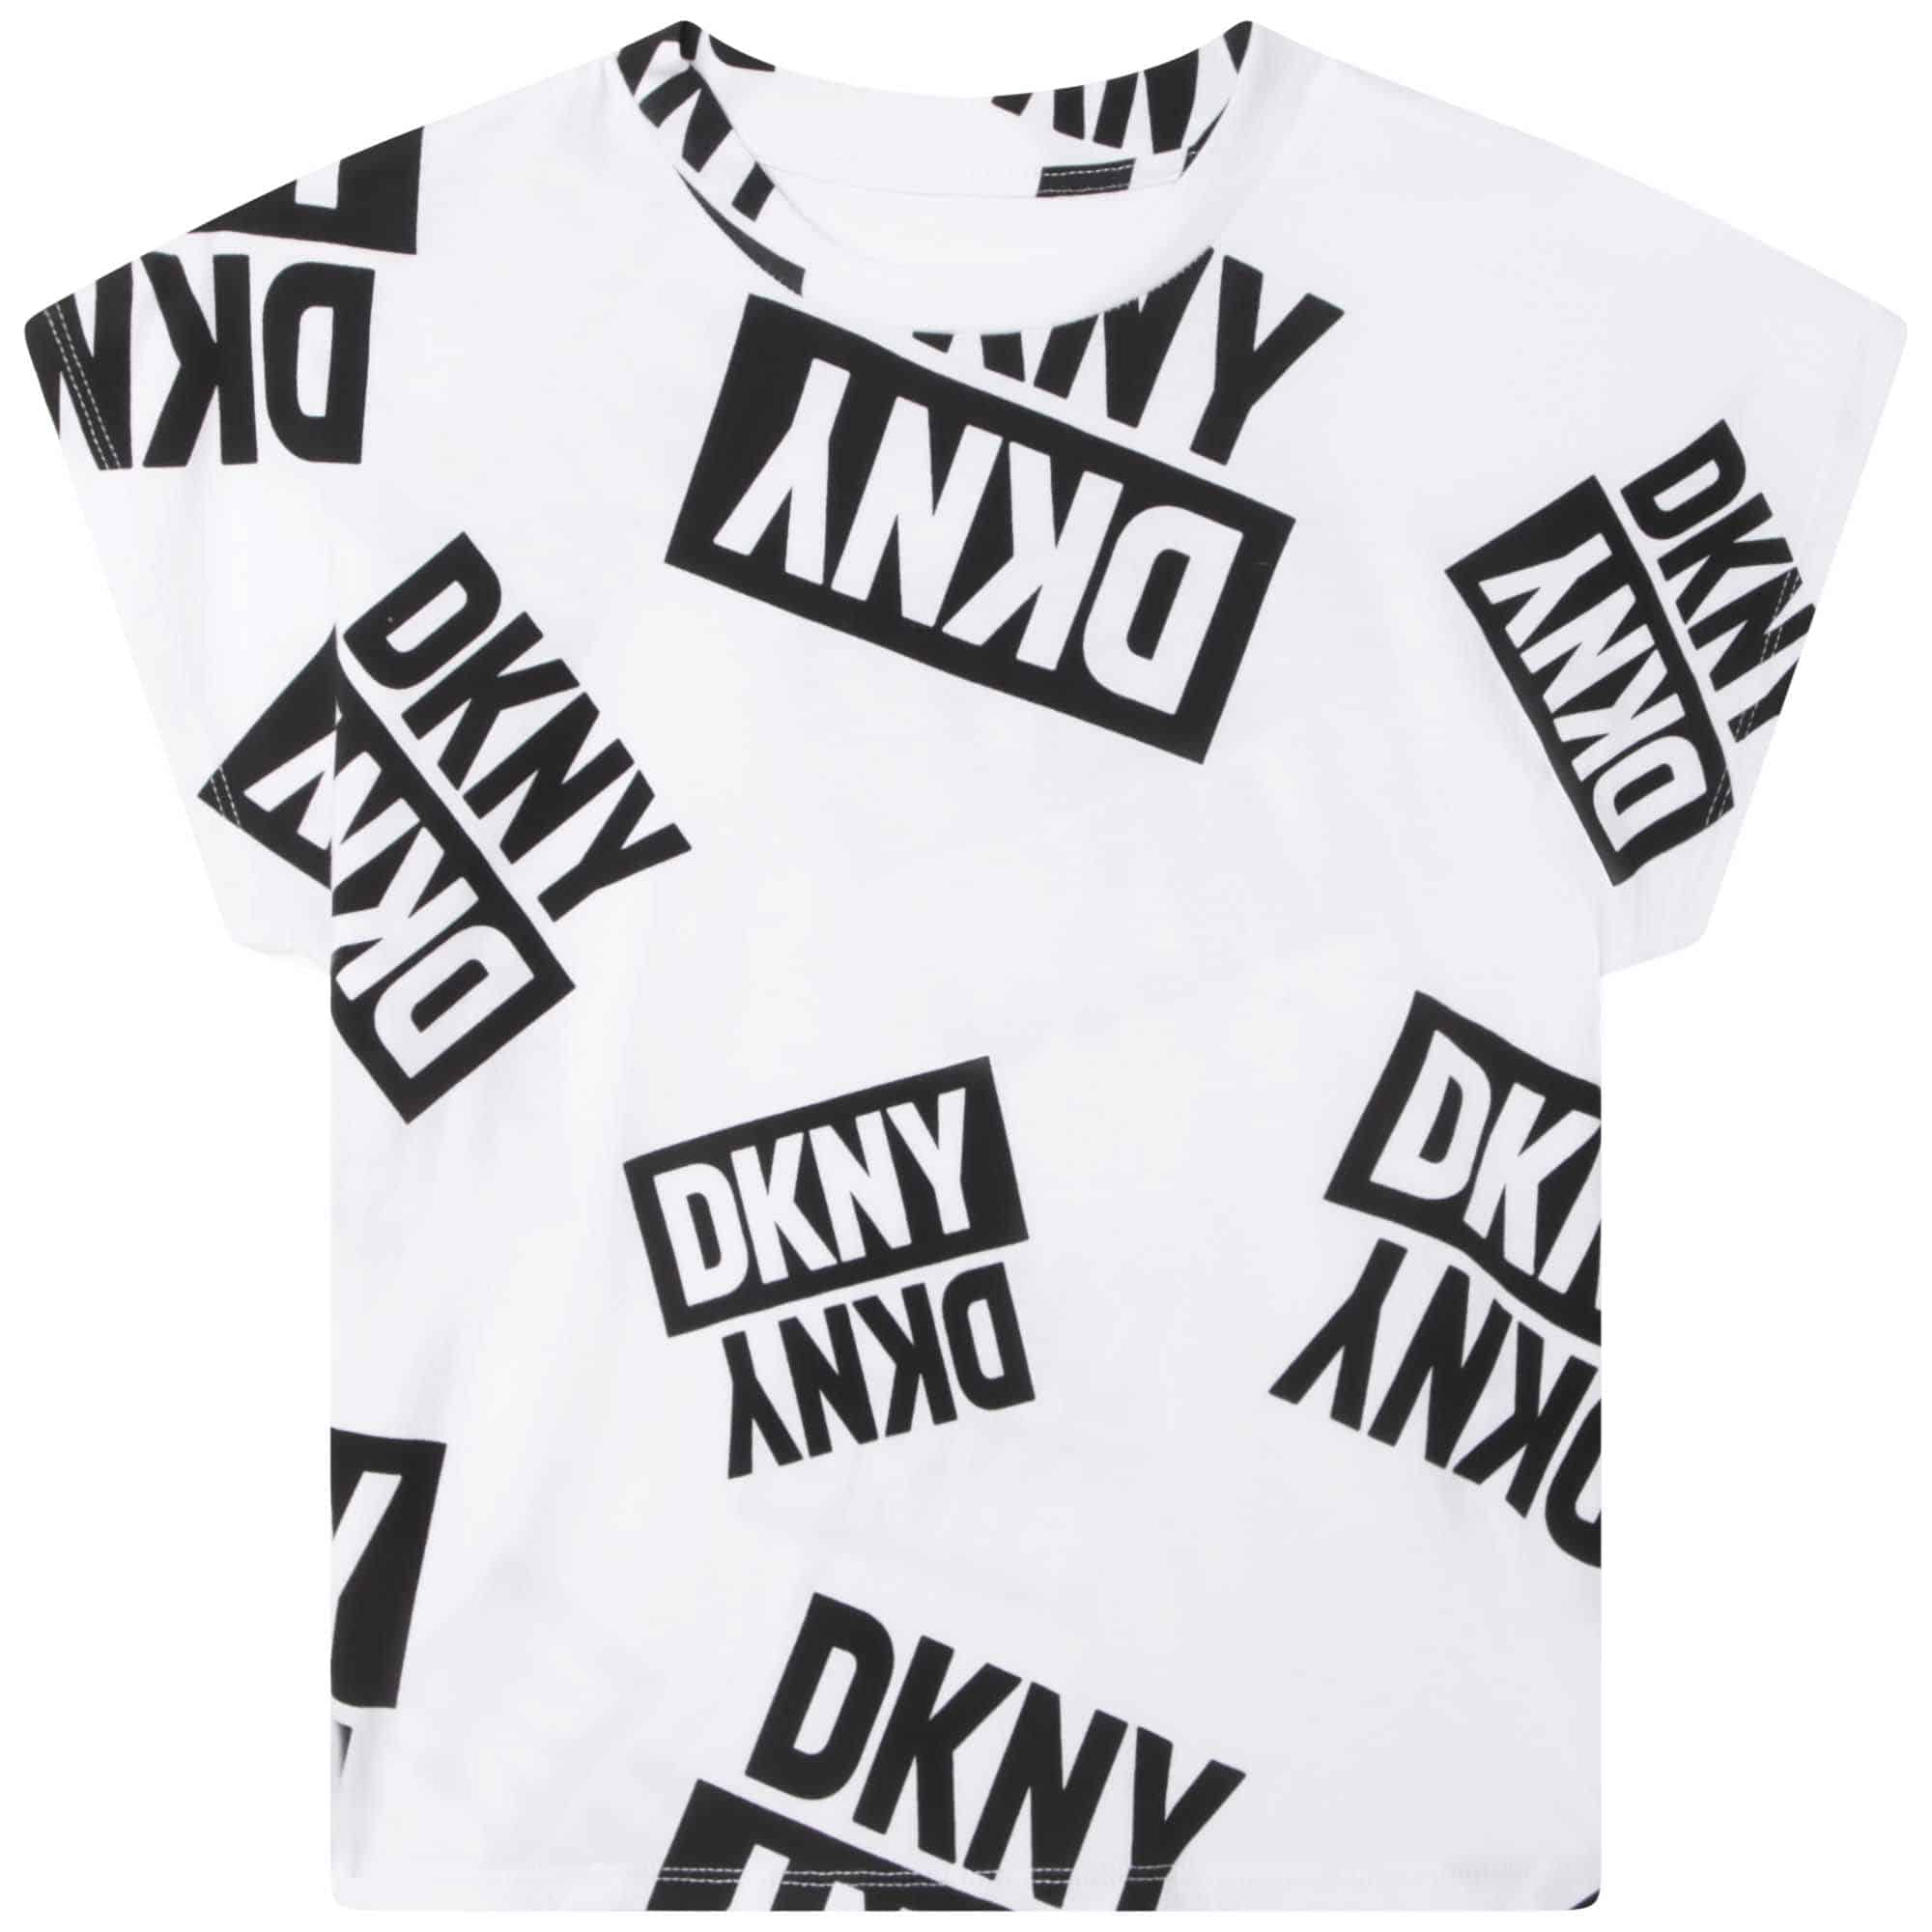 Dkny t-shirt for girls